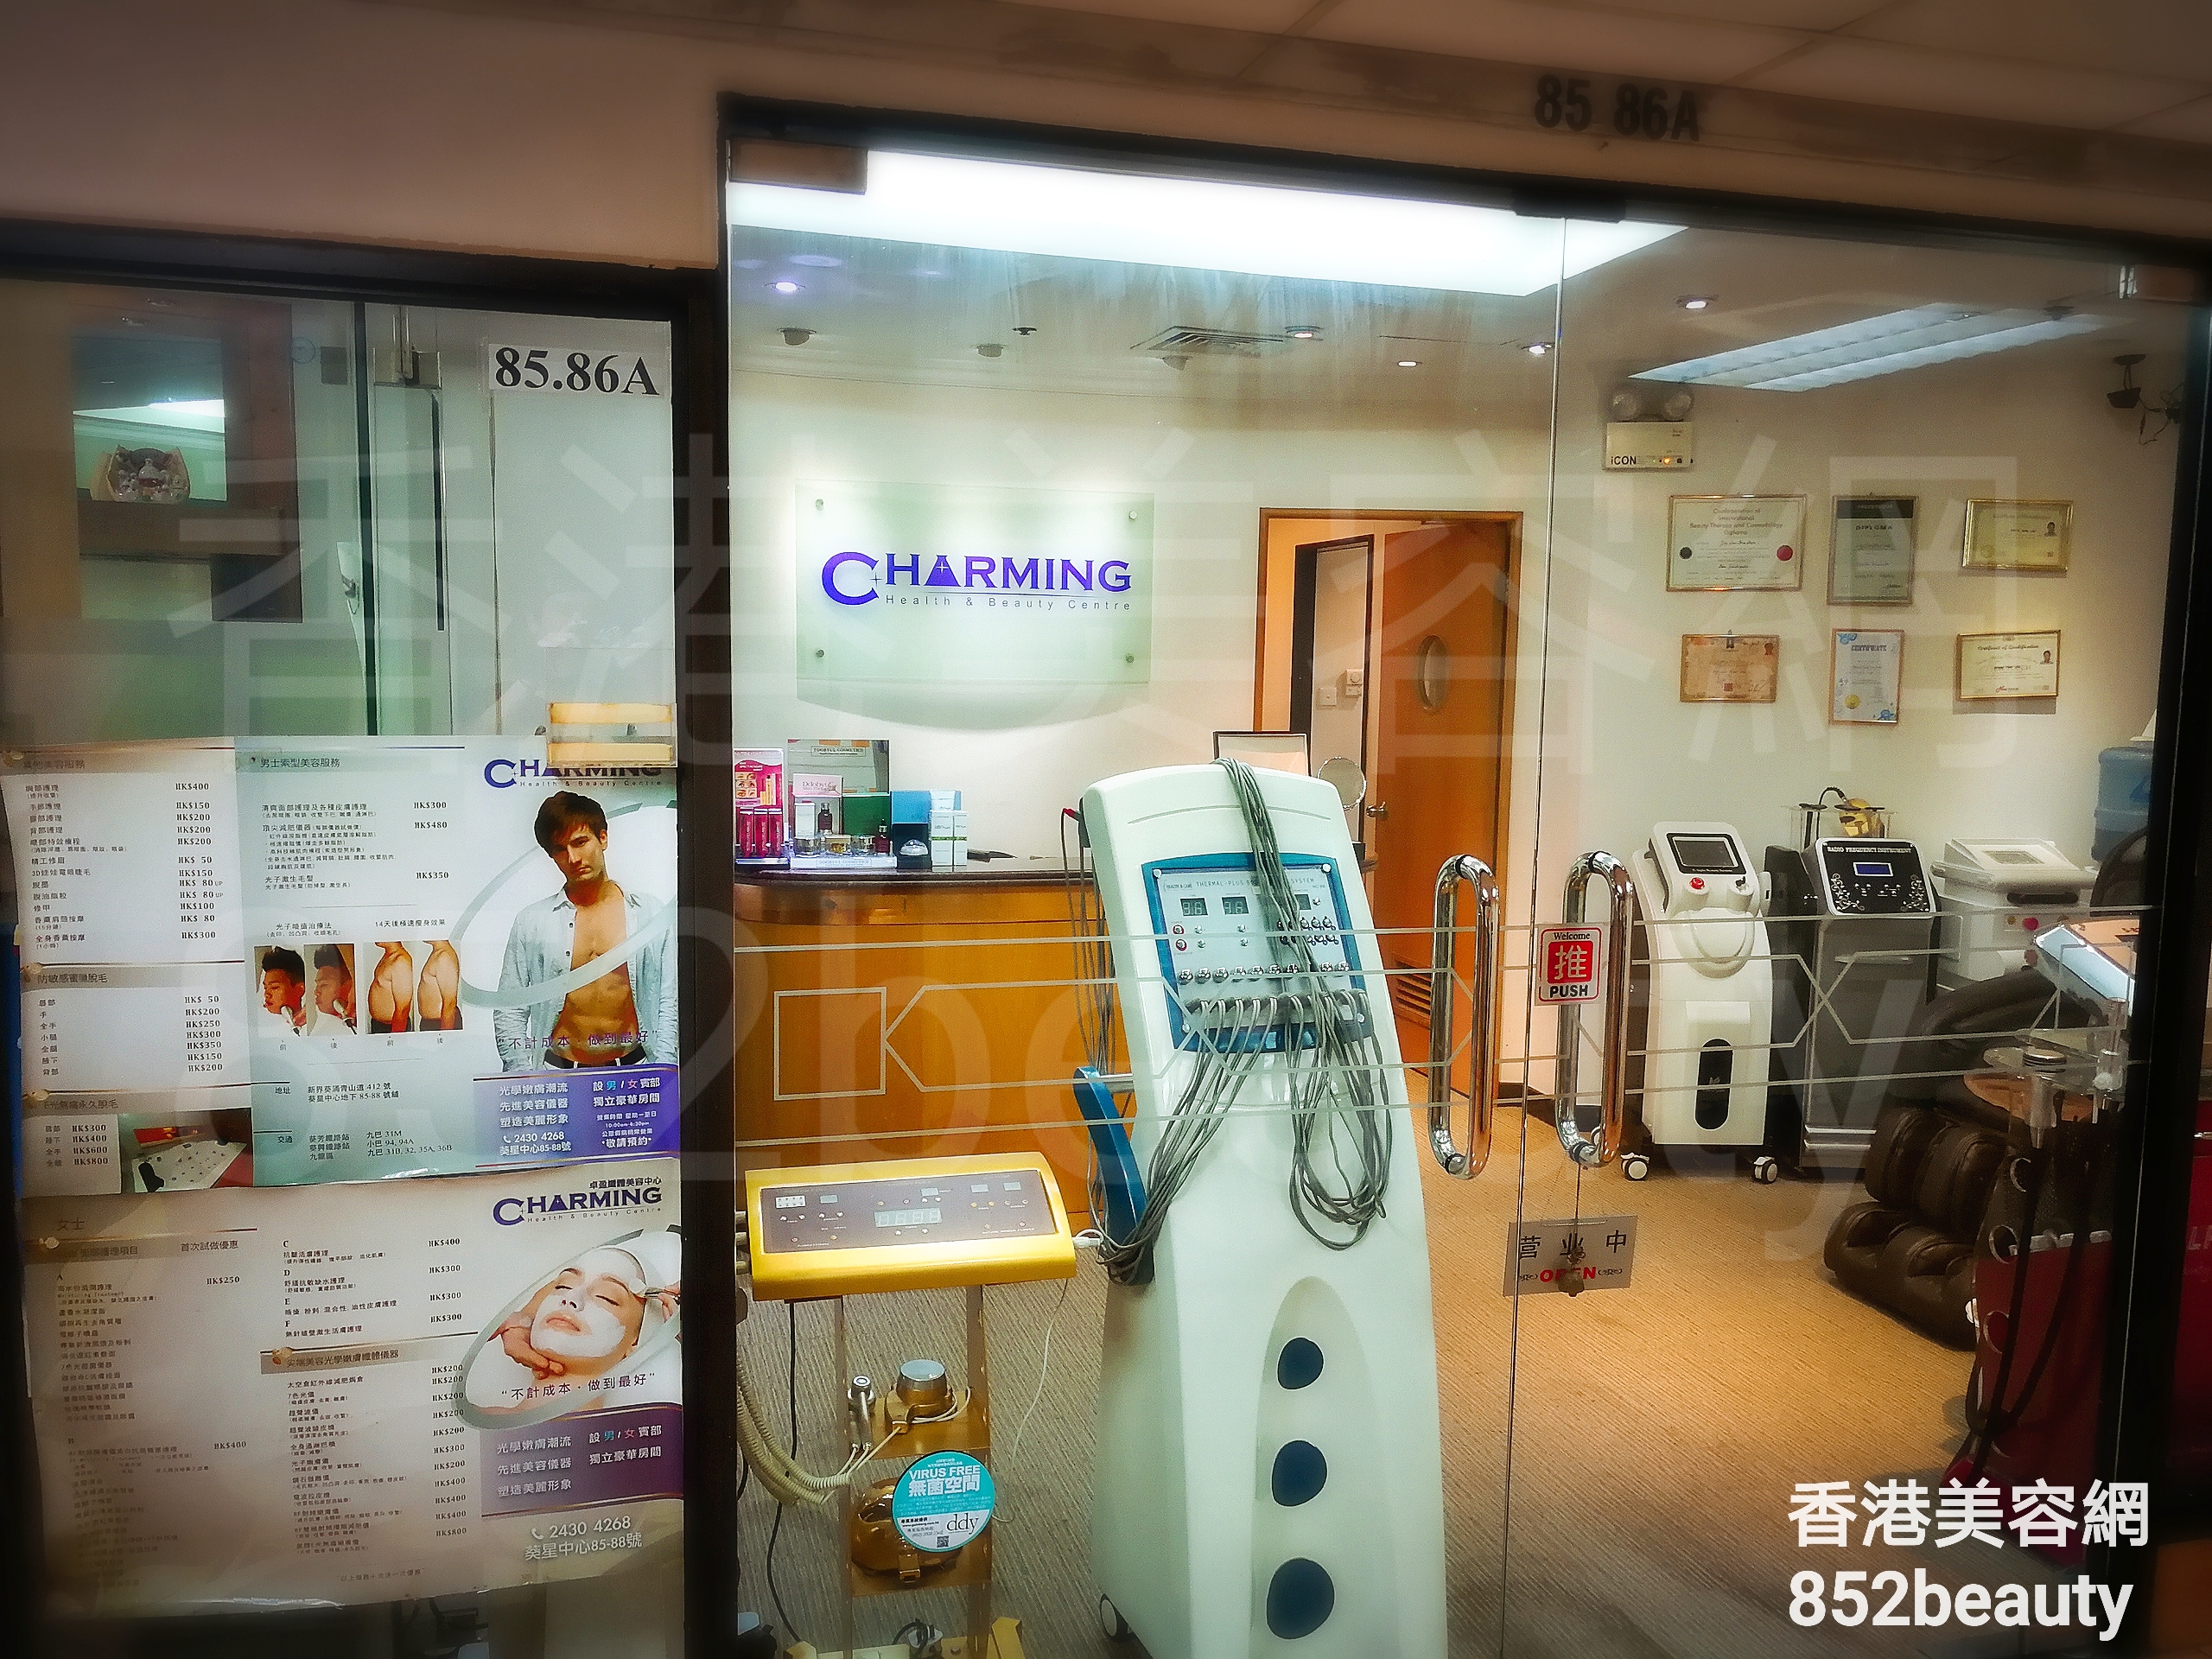 香港美容網 Hong Kong Beauty Salon 美容院 / 美容師: Charming Health & Beauty Centre